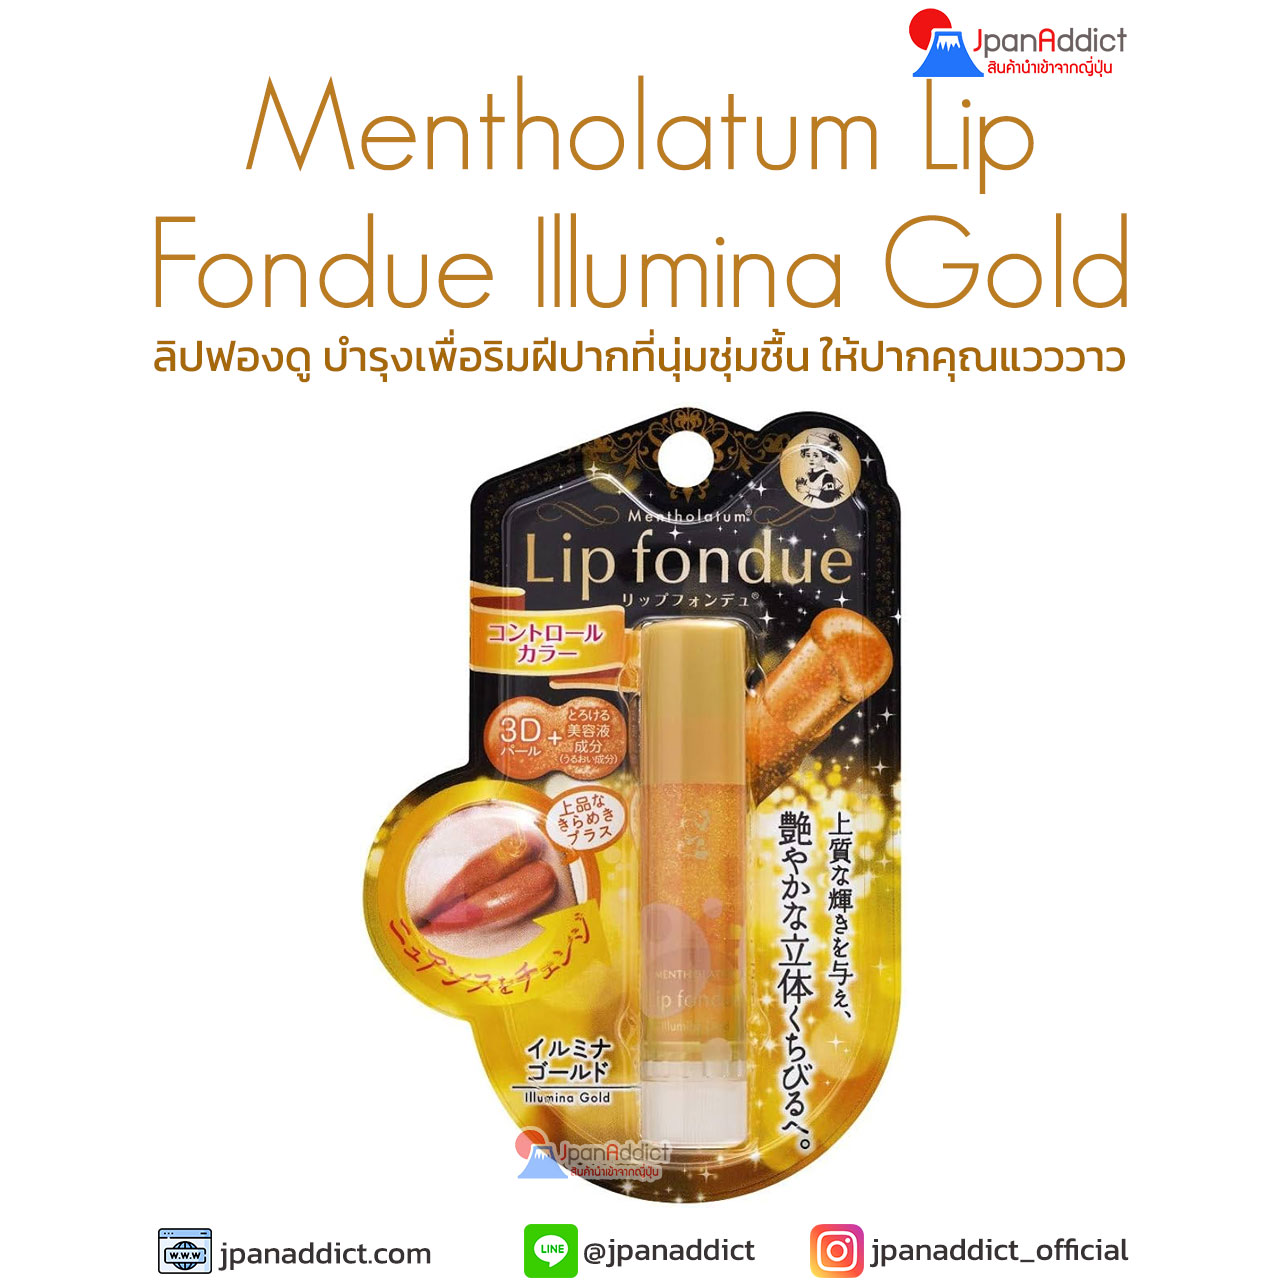 Mentholatum Lip Fondue Illumina Gold